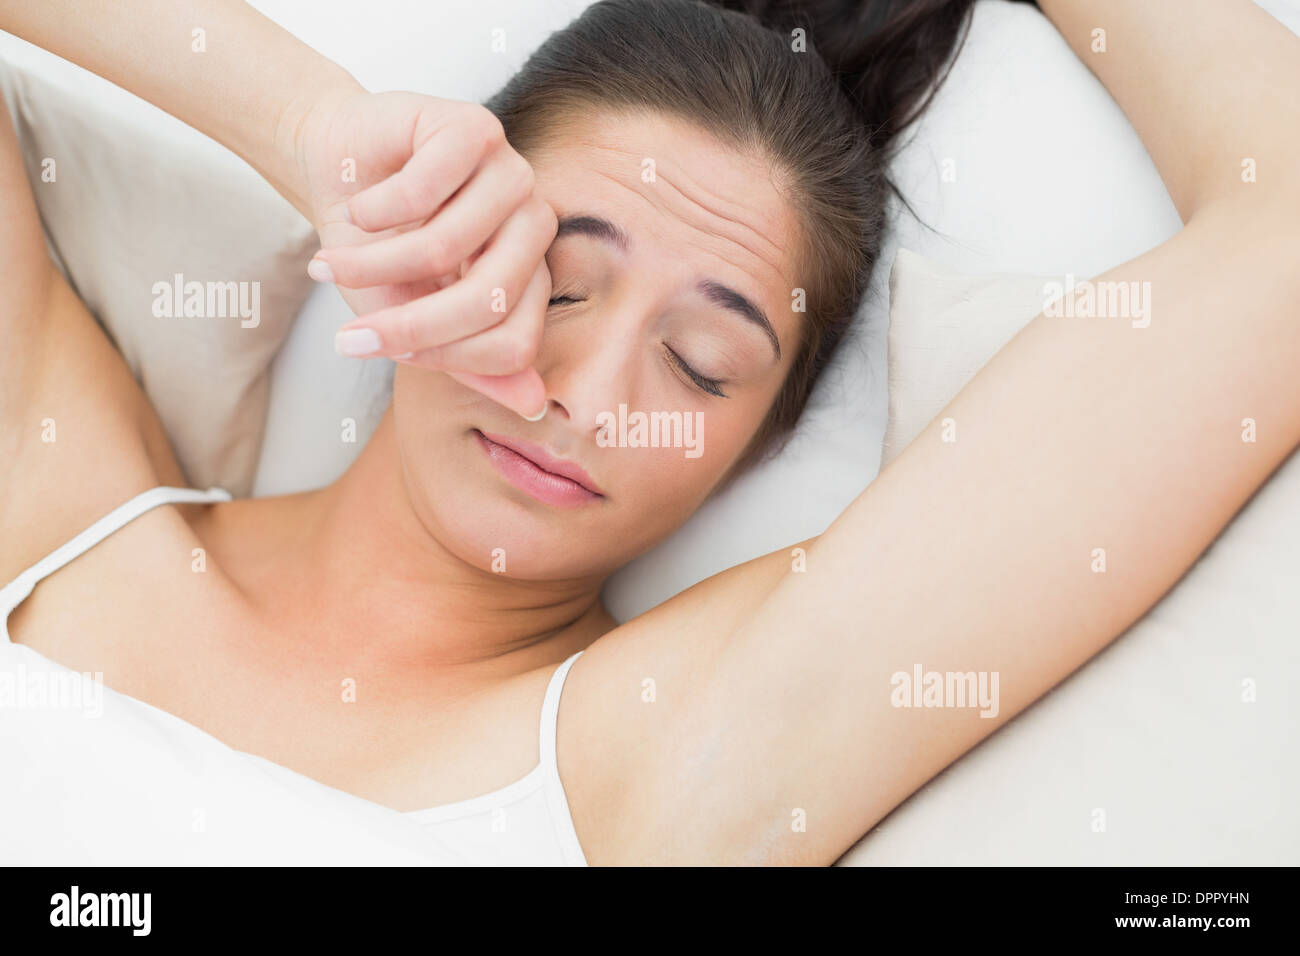 Beautiful woman rubbing eye in bed Stock Photo